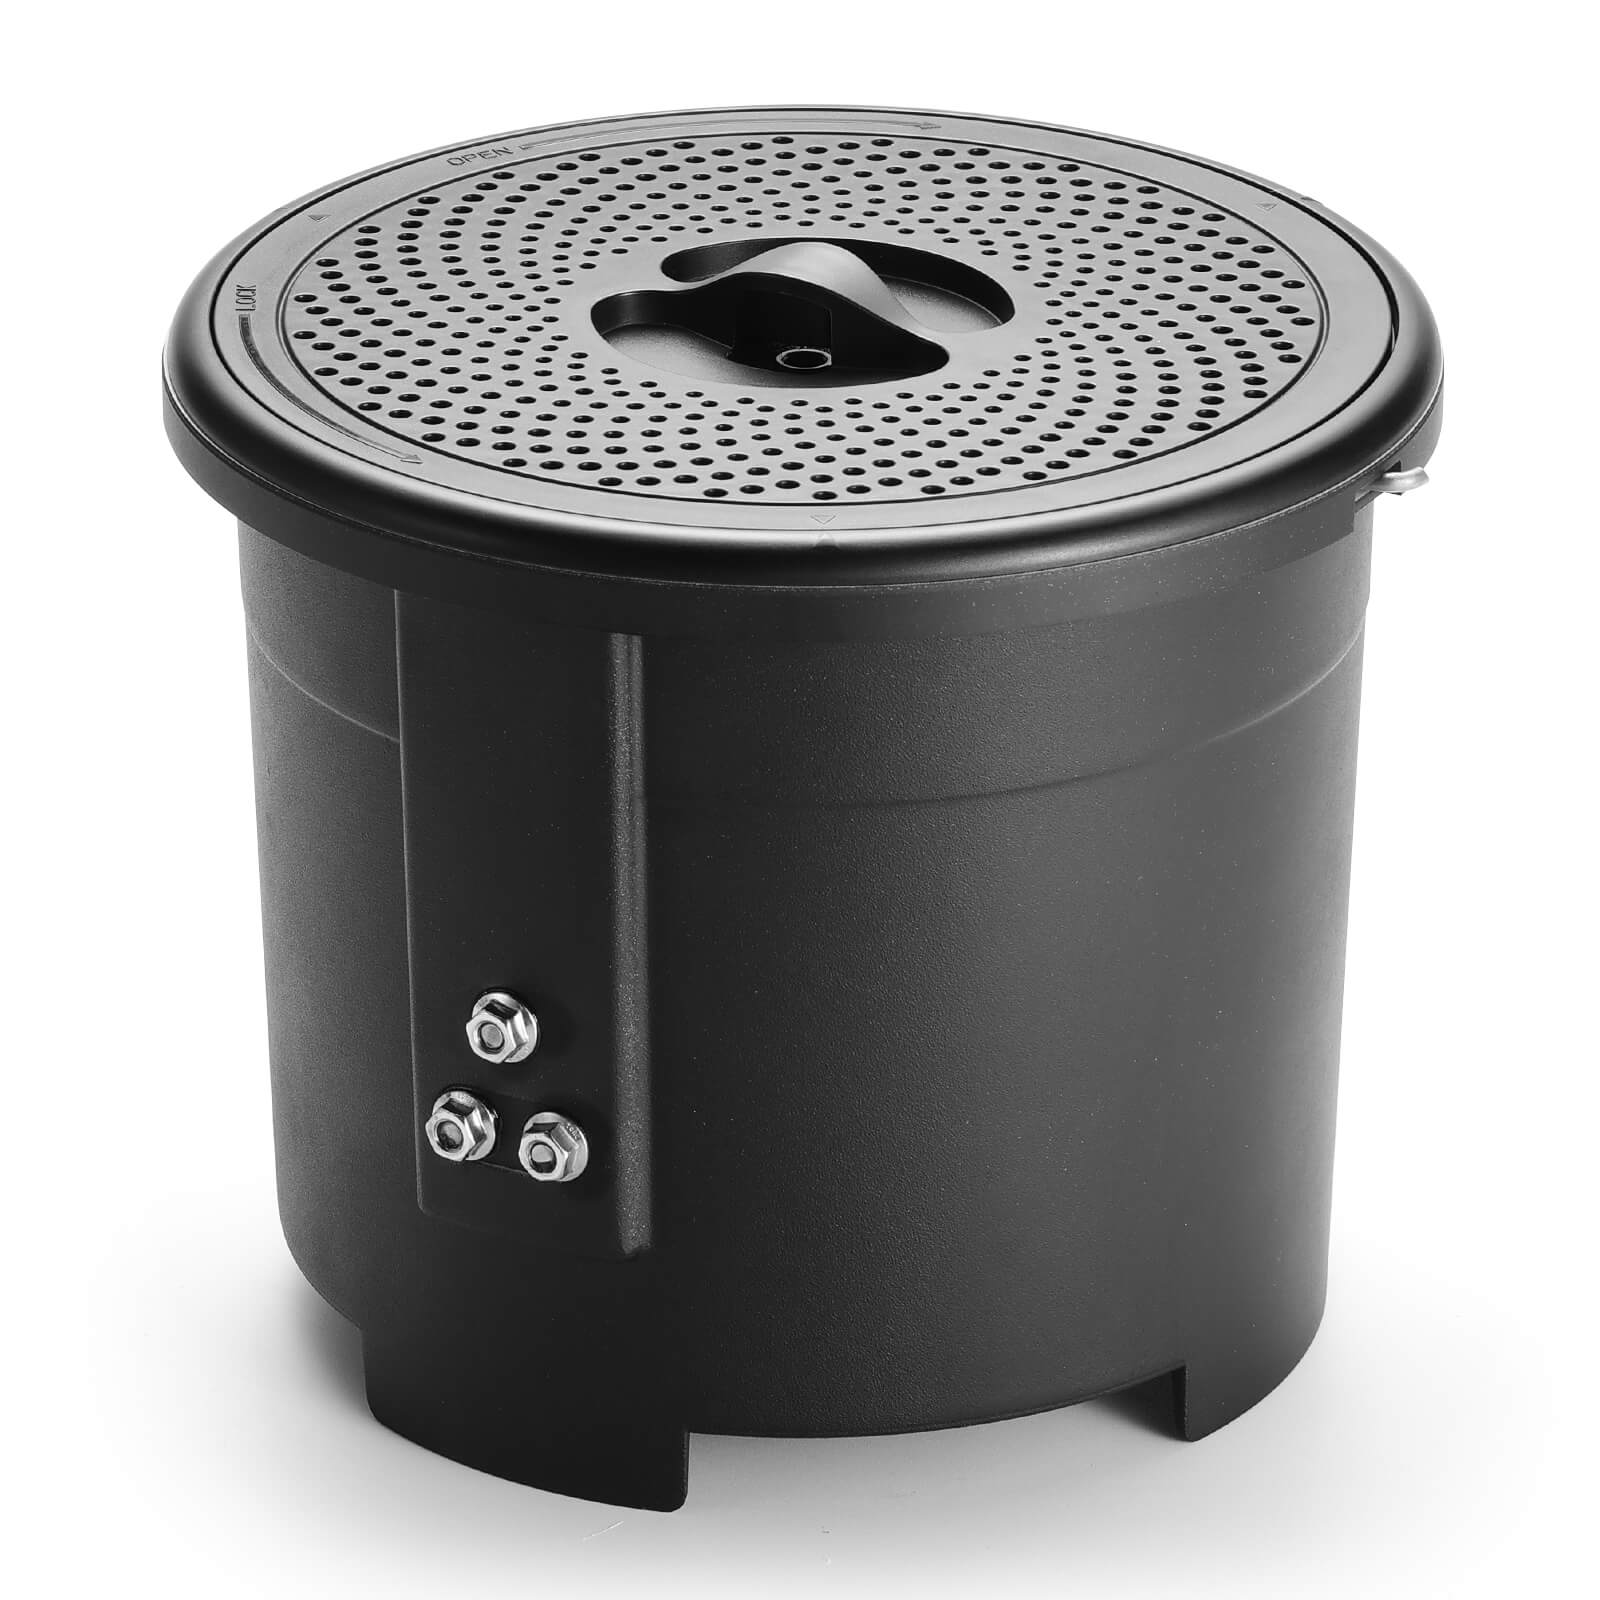 Paris Rhône Electric Countertop Composter, Kitchen Compost Bin, No Odor and Auto Stop